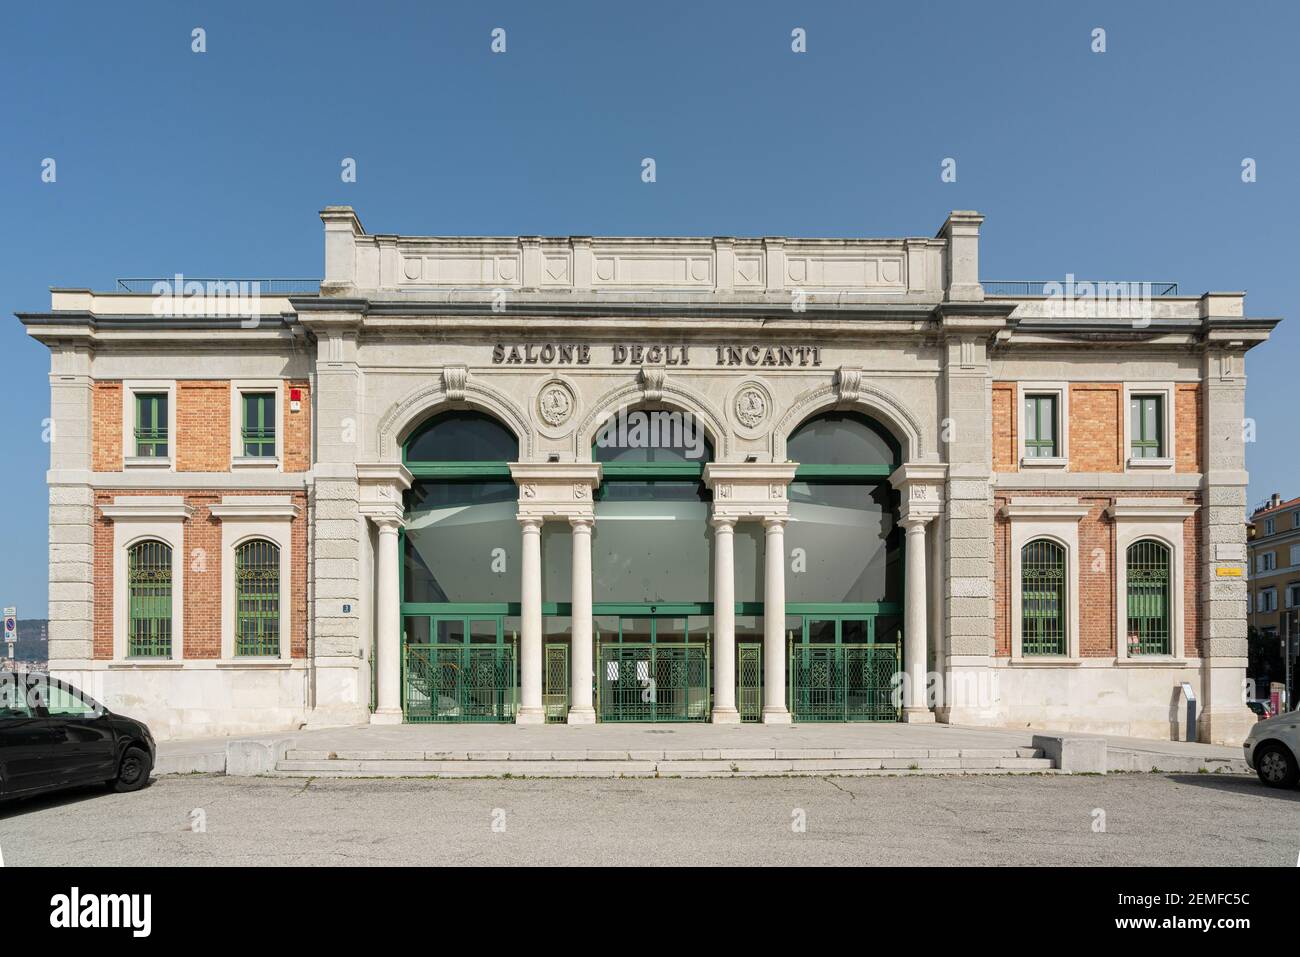 Trieste, Italy. 24 February 2021. view of the facade of the Salone degli Incanti in the city center Stock Photo